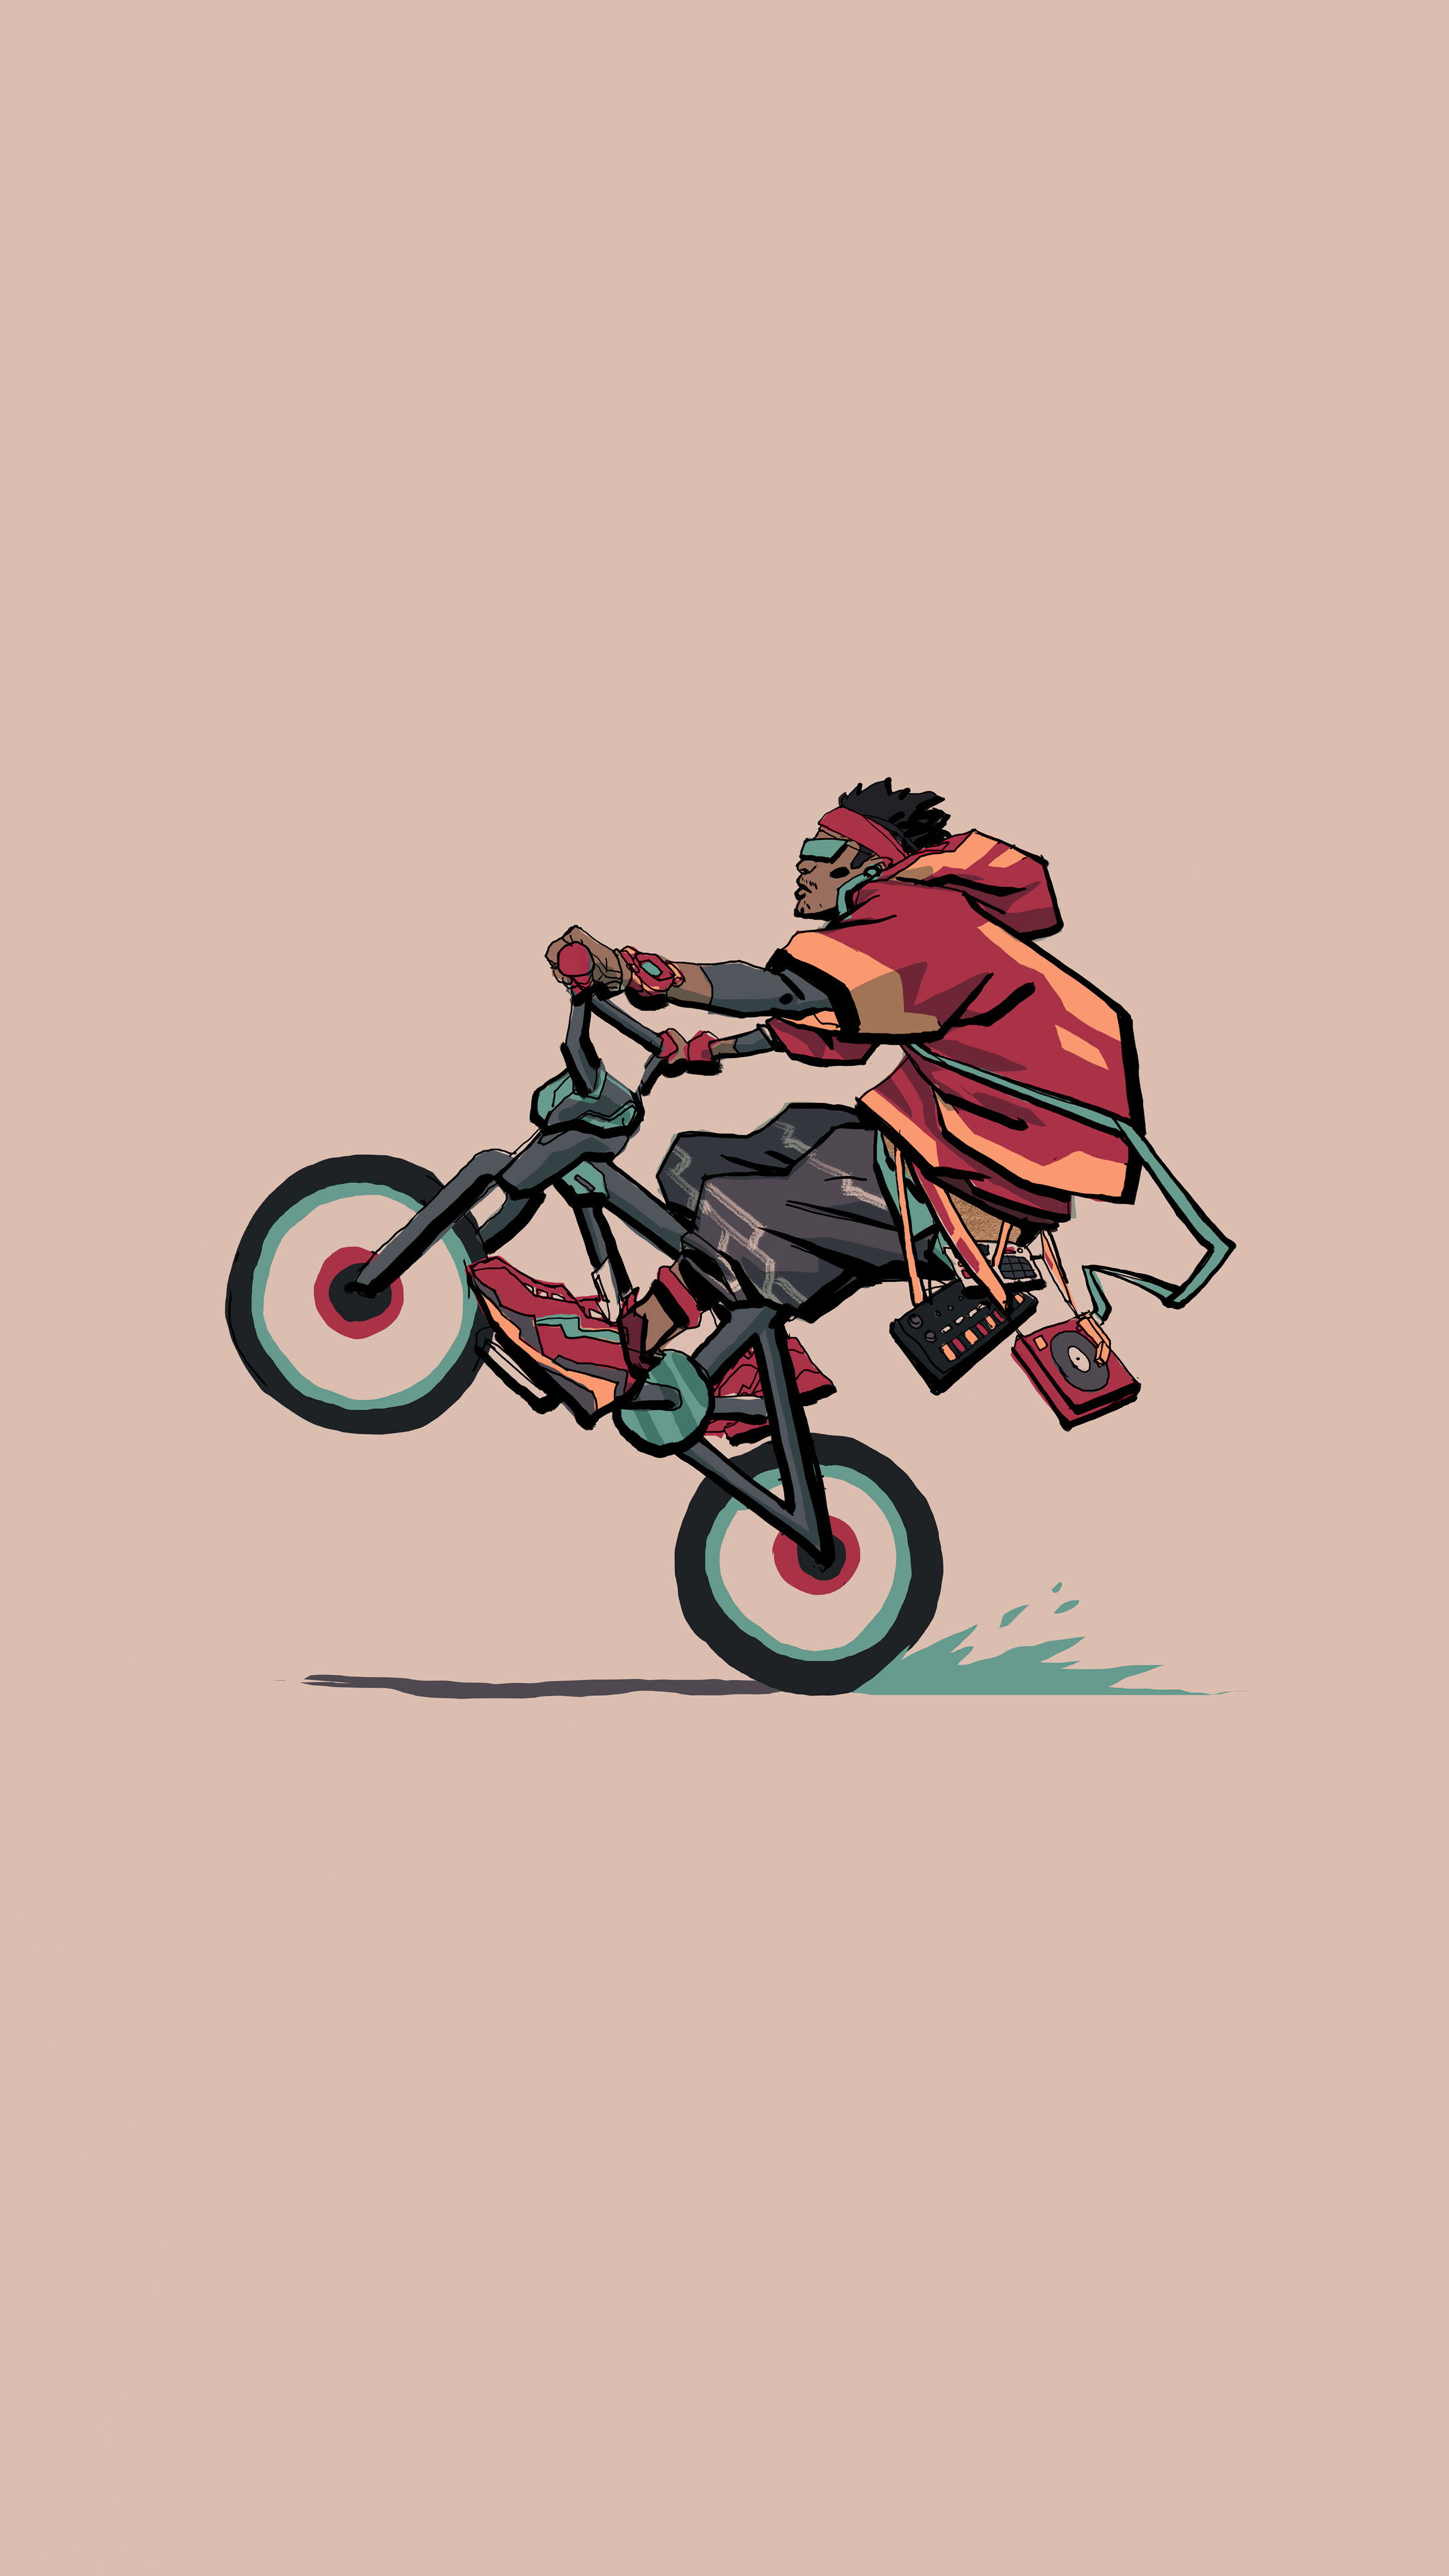 Stunt: Bicycle stuntman doing wheelstand, Fan art. 2160x3840 4K Wallpaper.